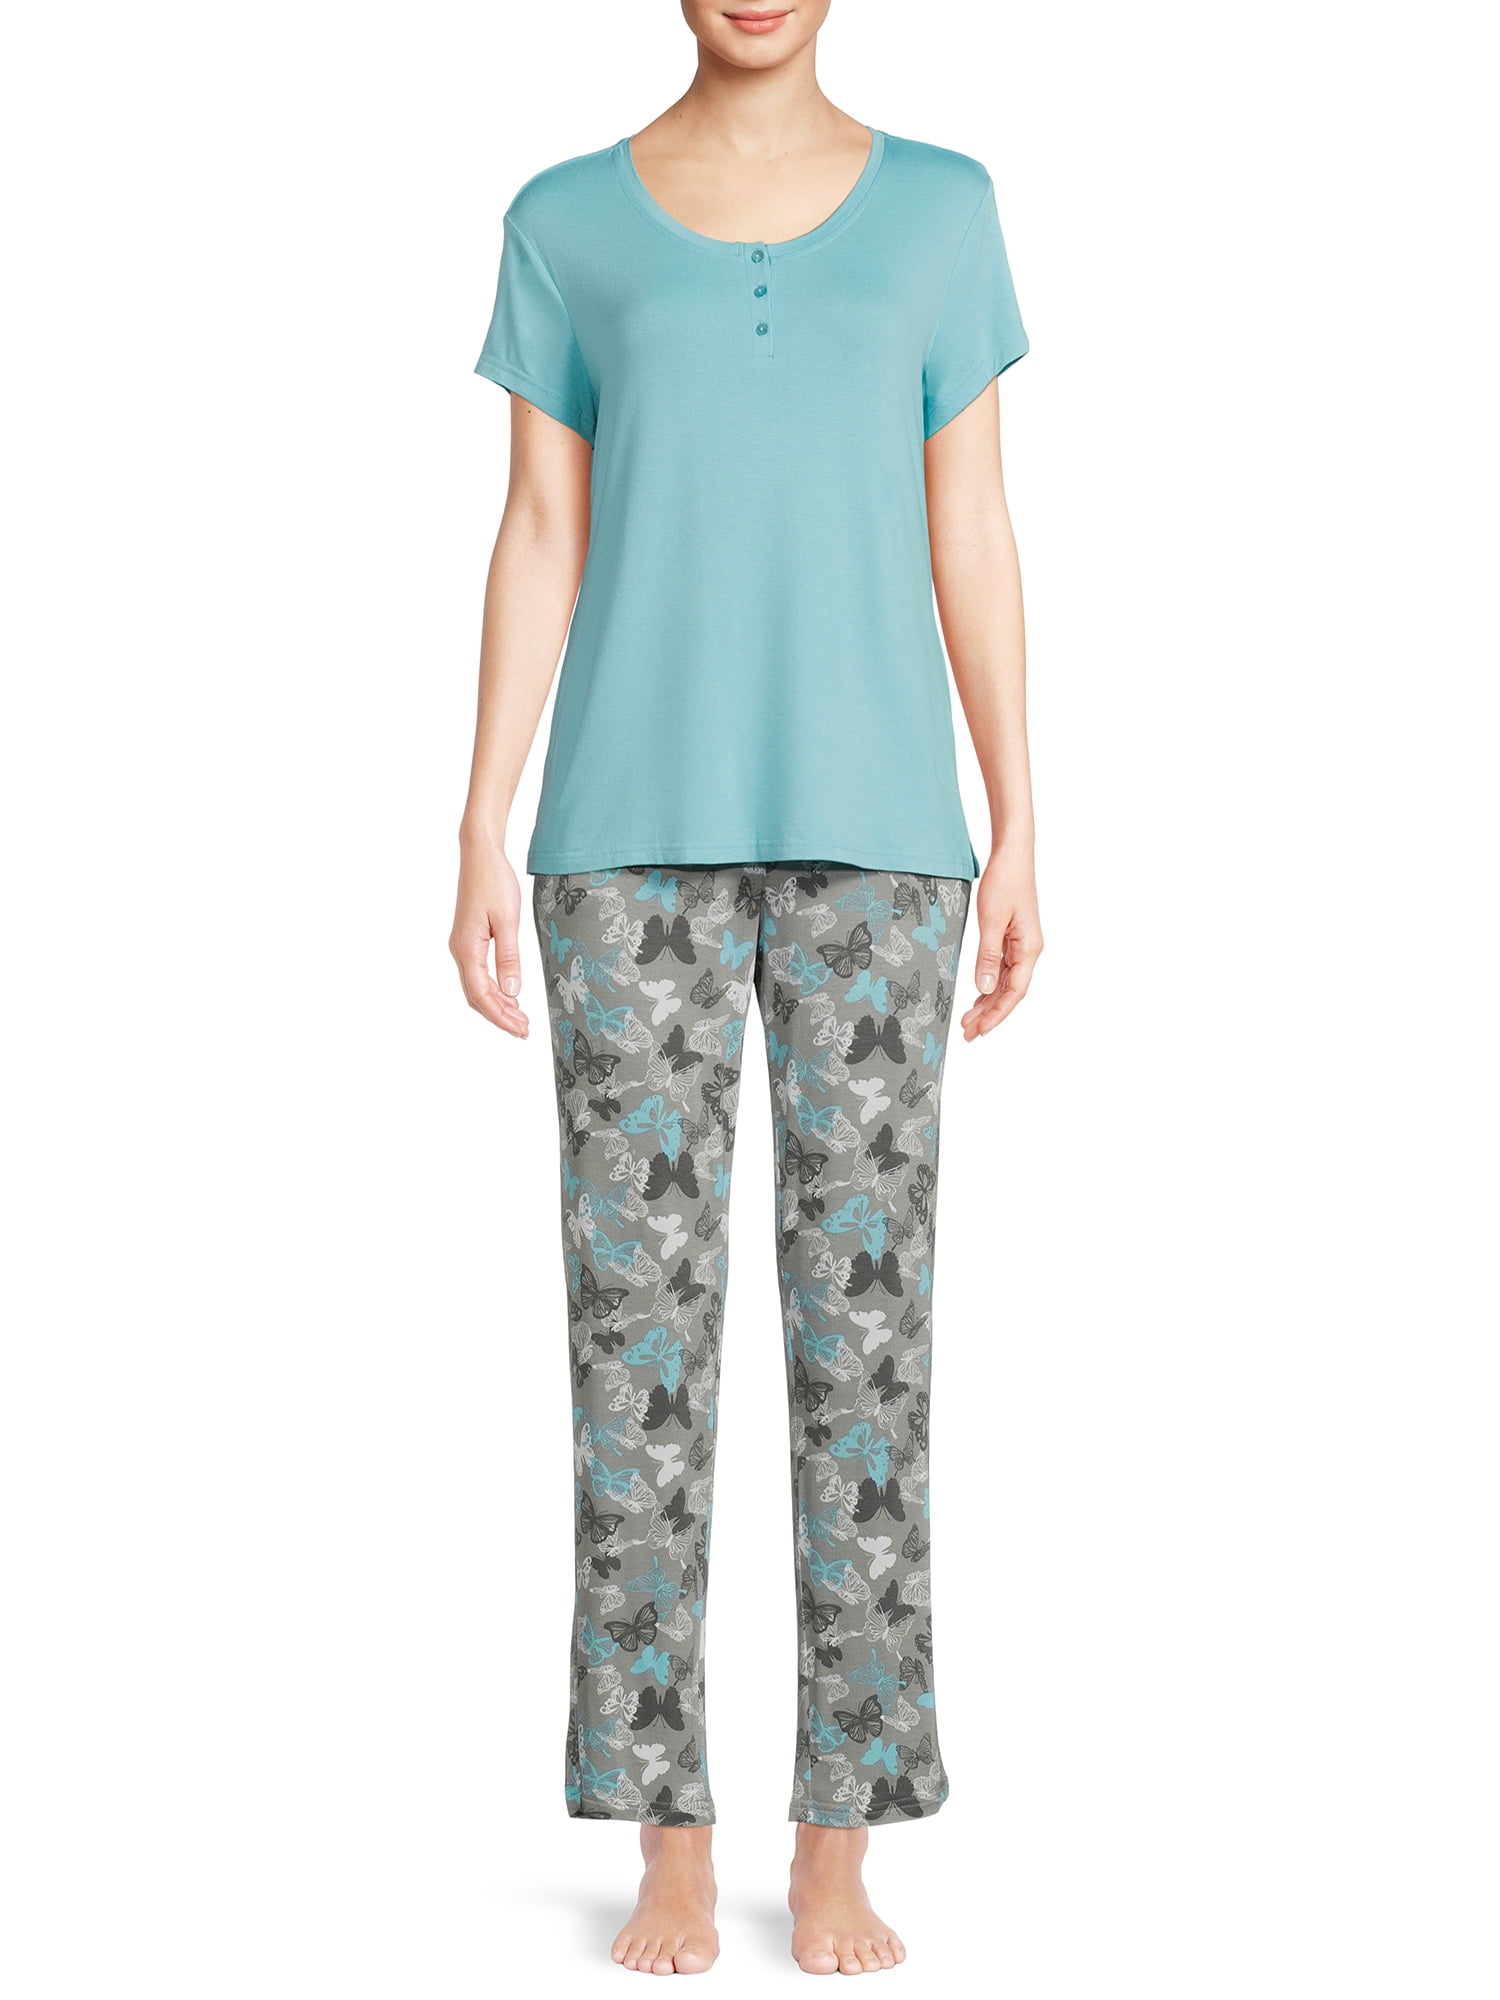 Hanes Women's and Women's Plus Comfort Supreme Short Sleeve Top and Pants  PJ Set, 2-Piece 